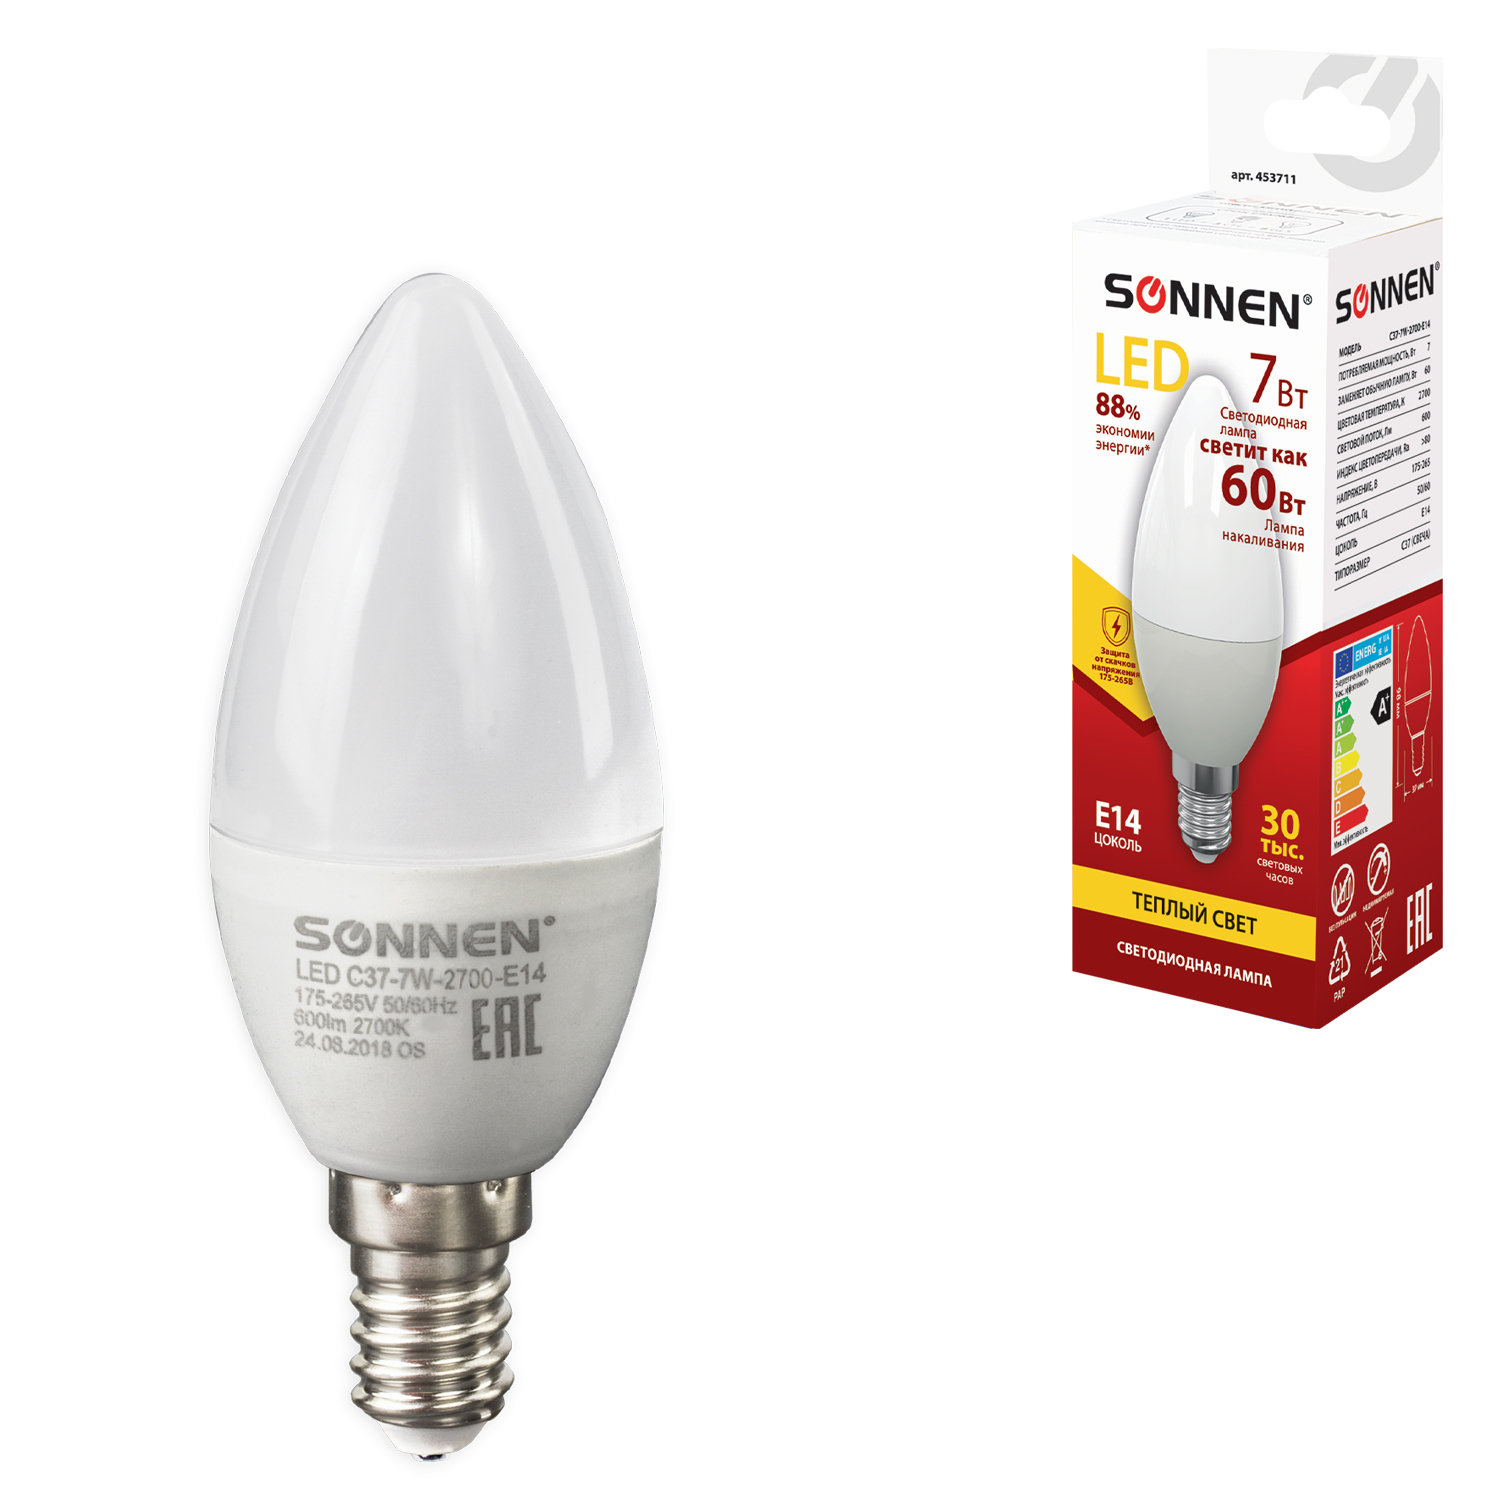 Лампа светодиодная SONNEN, 7 (60) Вт, цоколь Е14, свеча, теплый белый свет, 30000 ч, LED C37-7W-2700-E14, 453711 купите по выгодной цене